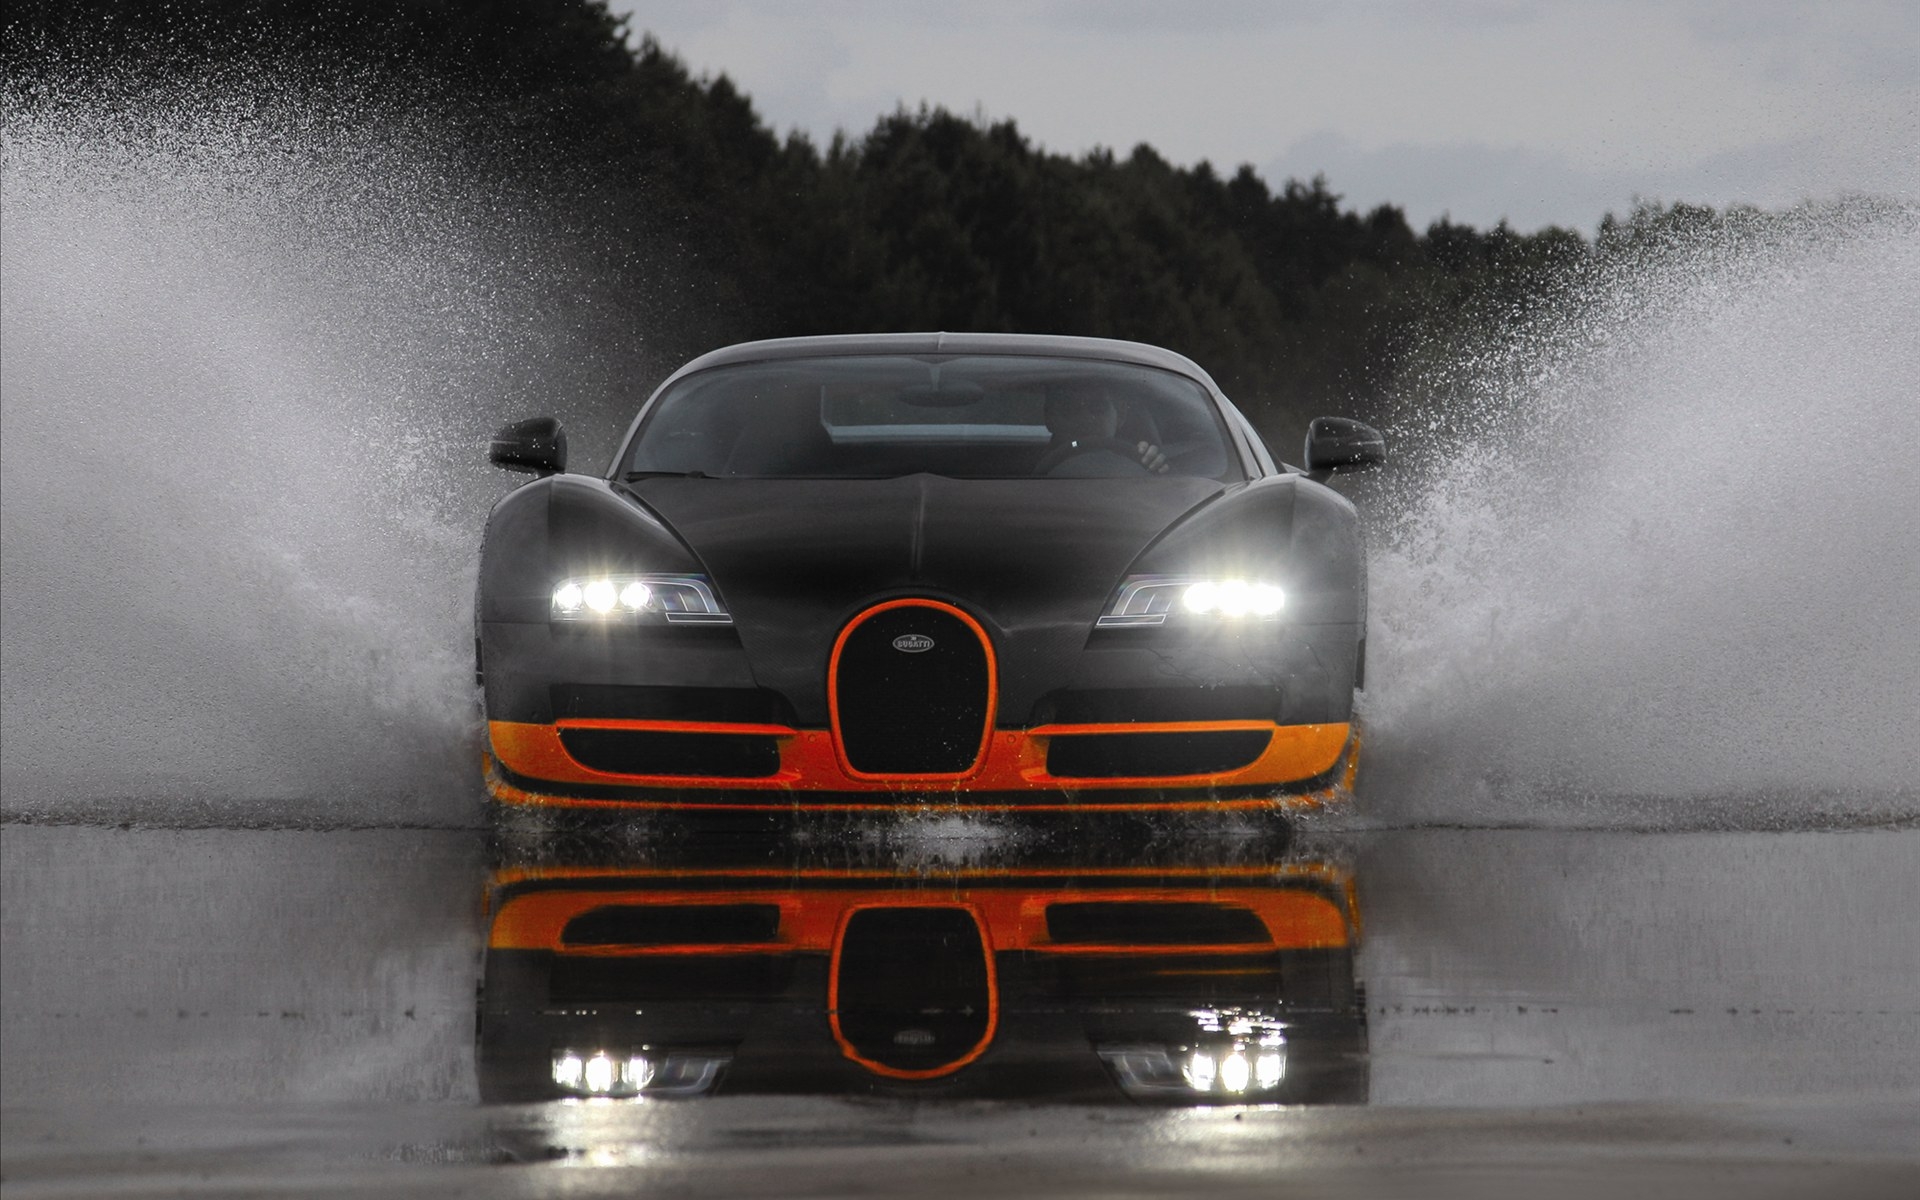 3d обои Bugatti Veyron на трассе  дороги # 35356